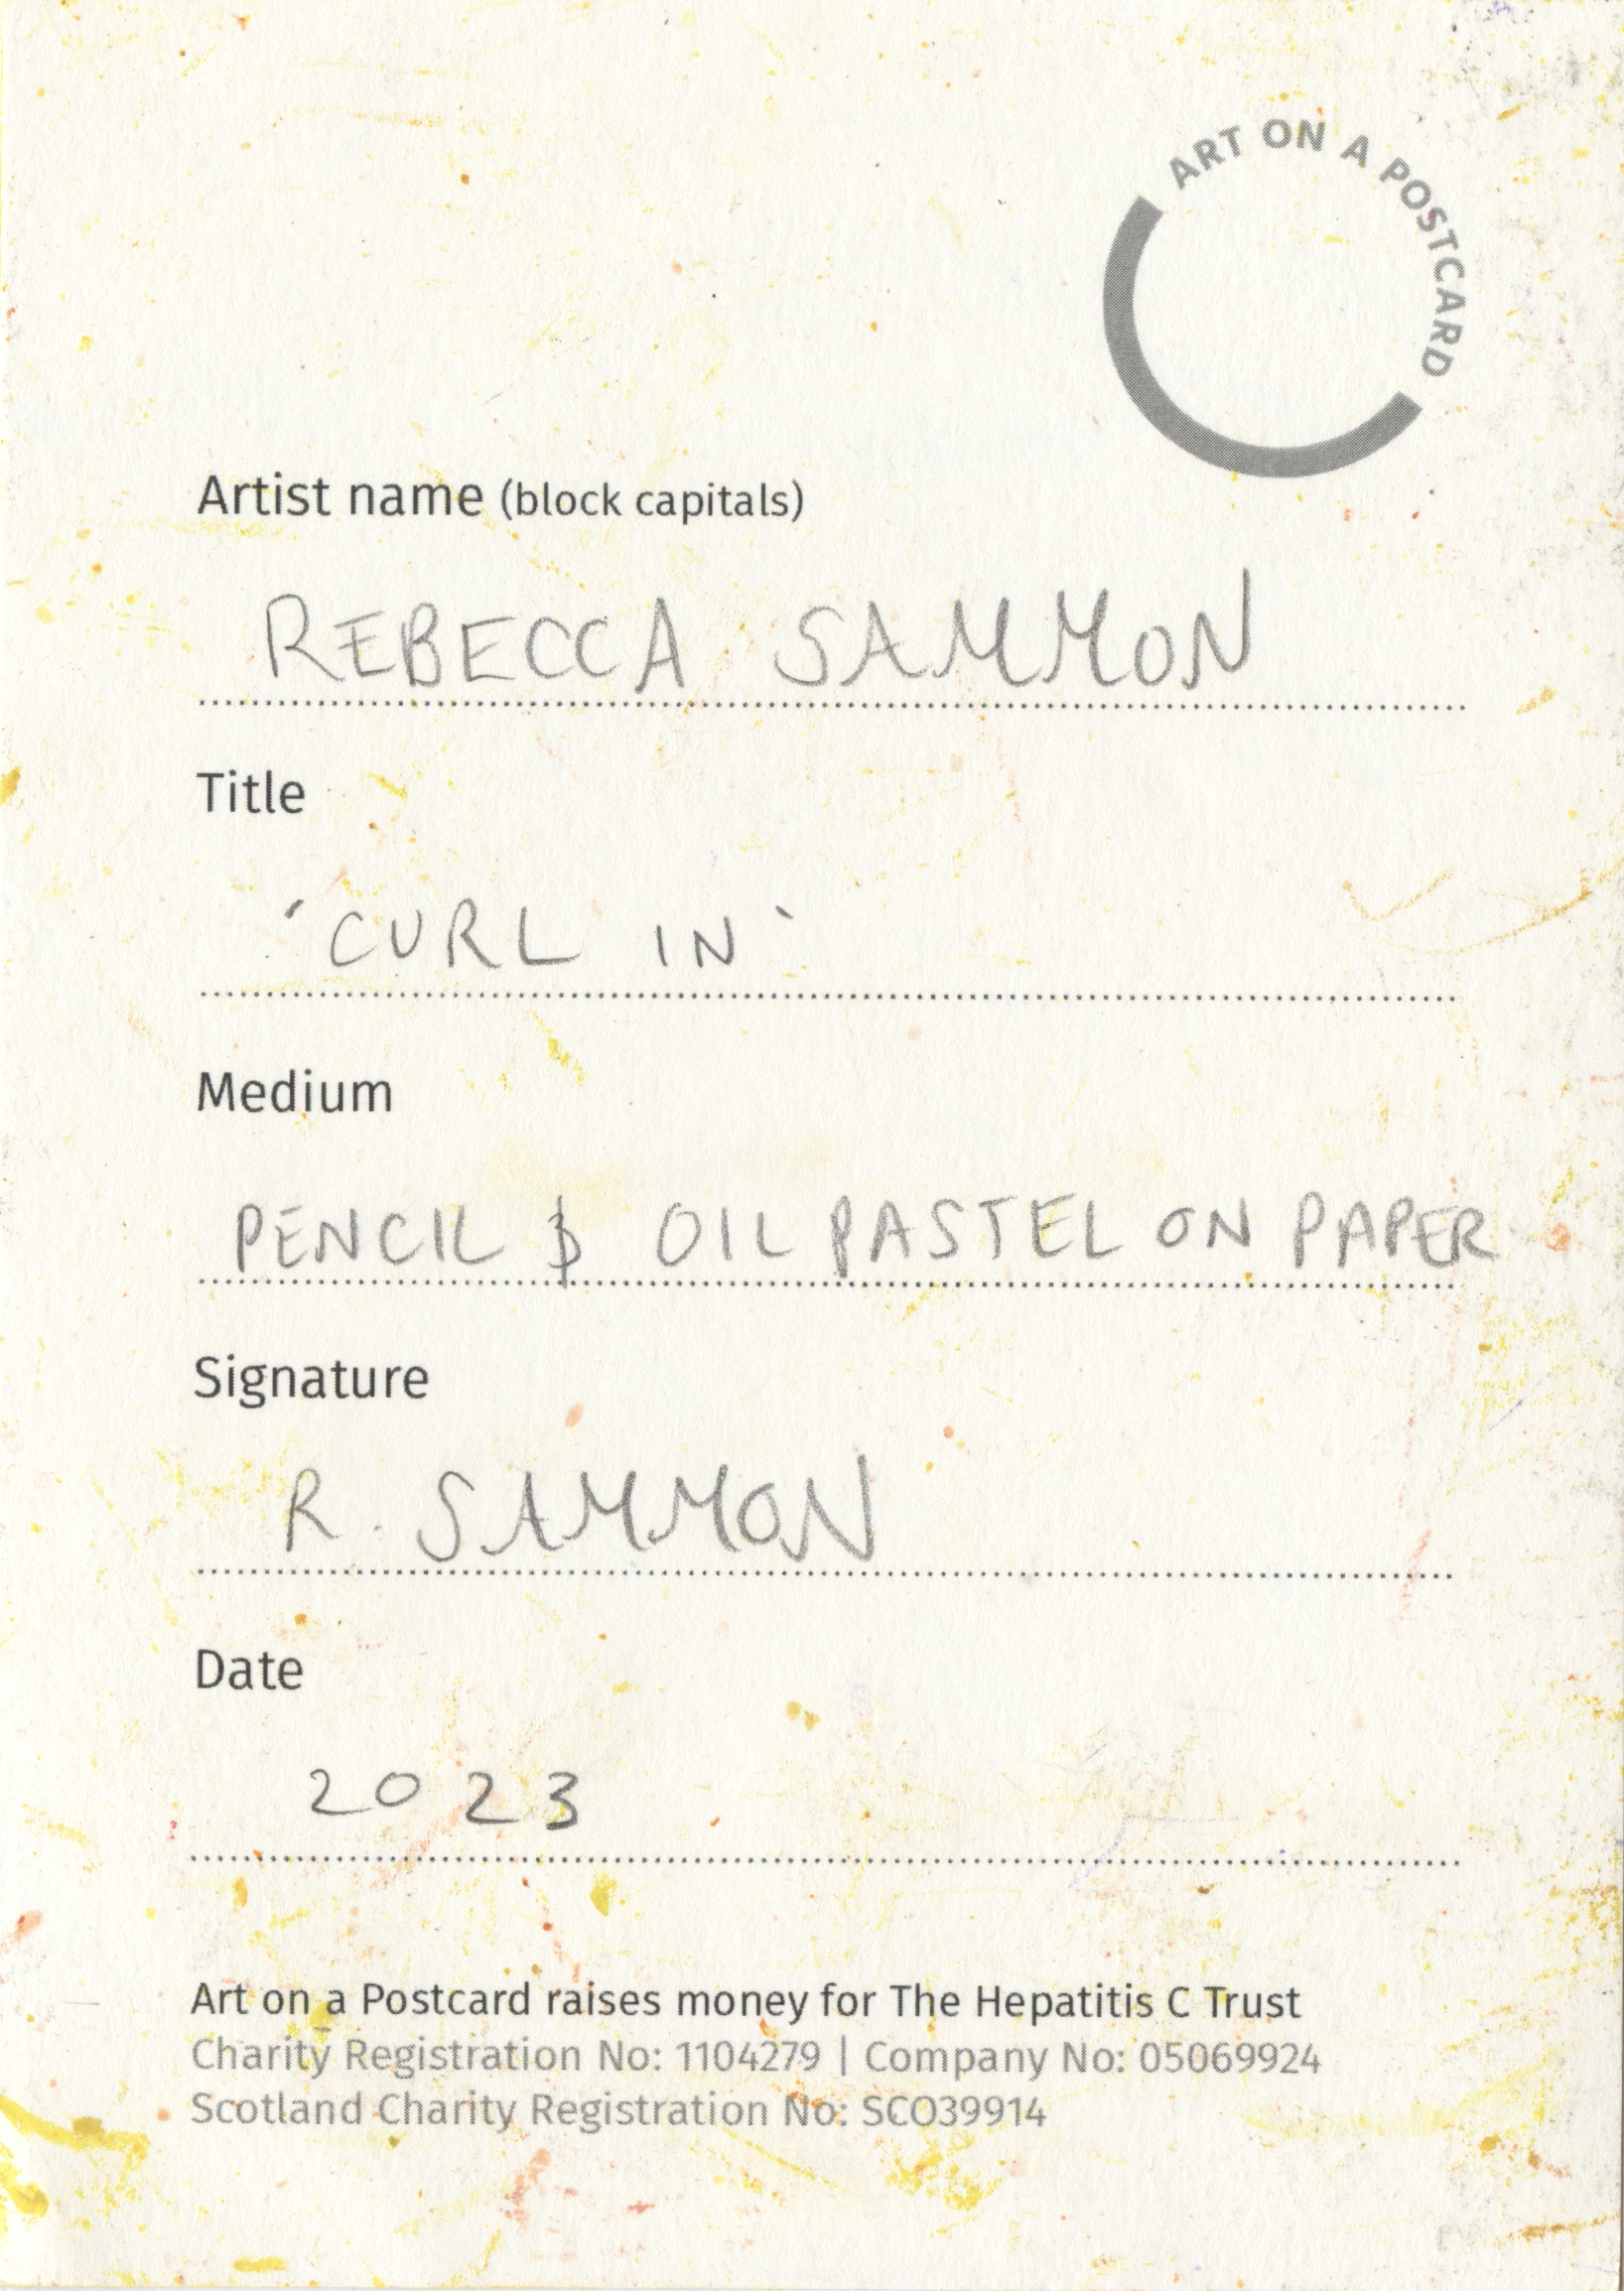 35. Rebecca Sammon - Curl in BACK